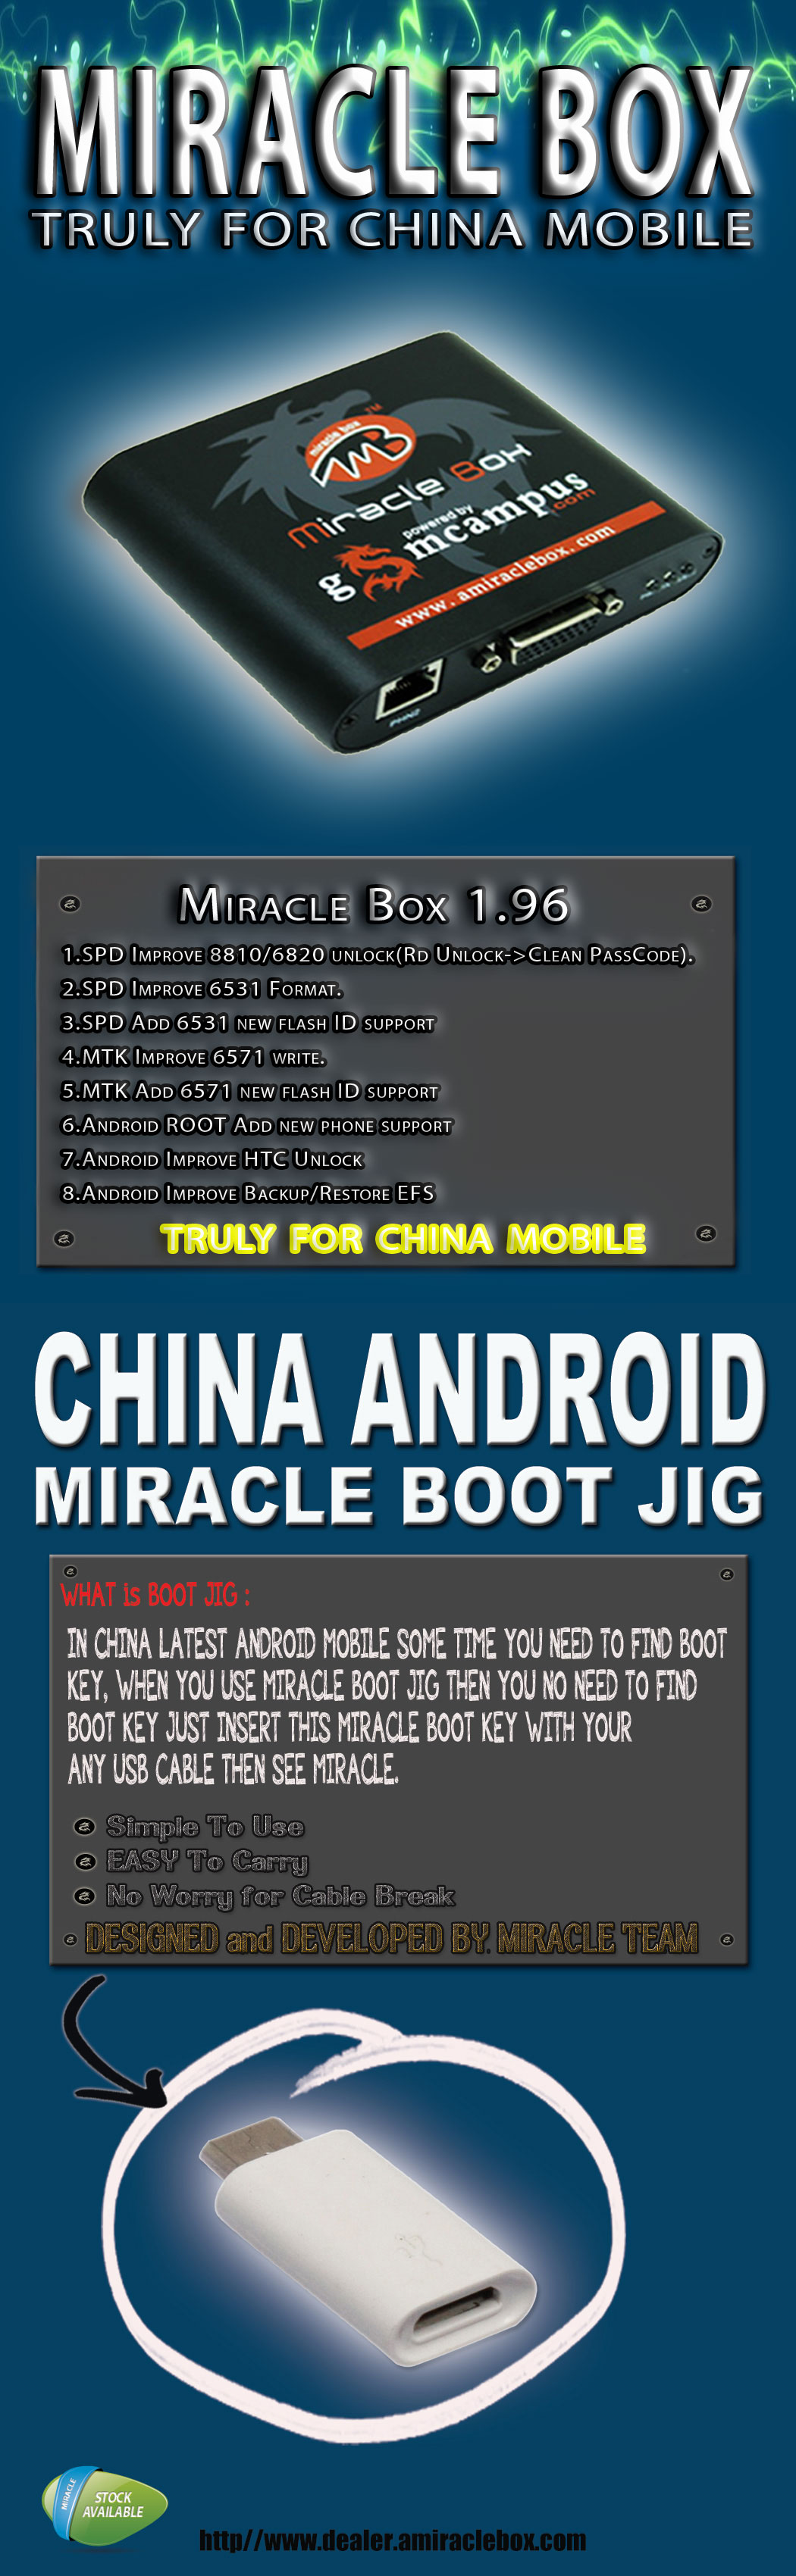 MIRACLE BOX 1.96 (MTK/SPD/ANDROID) 27th Nov 2014 Miracle-1.96